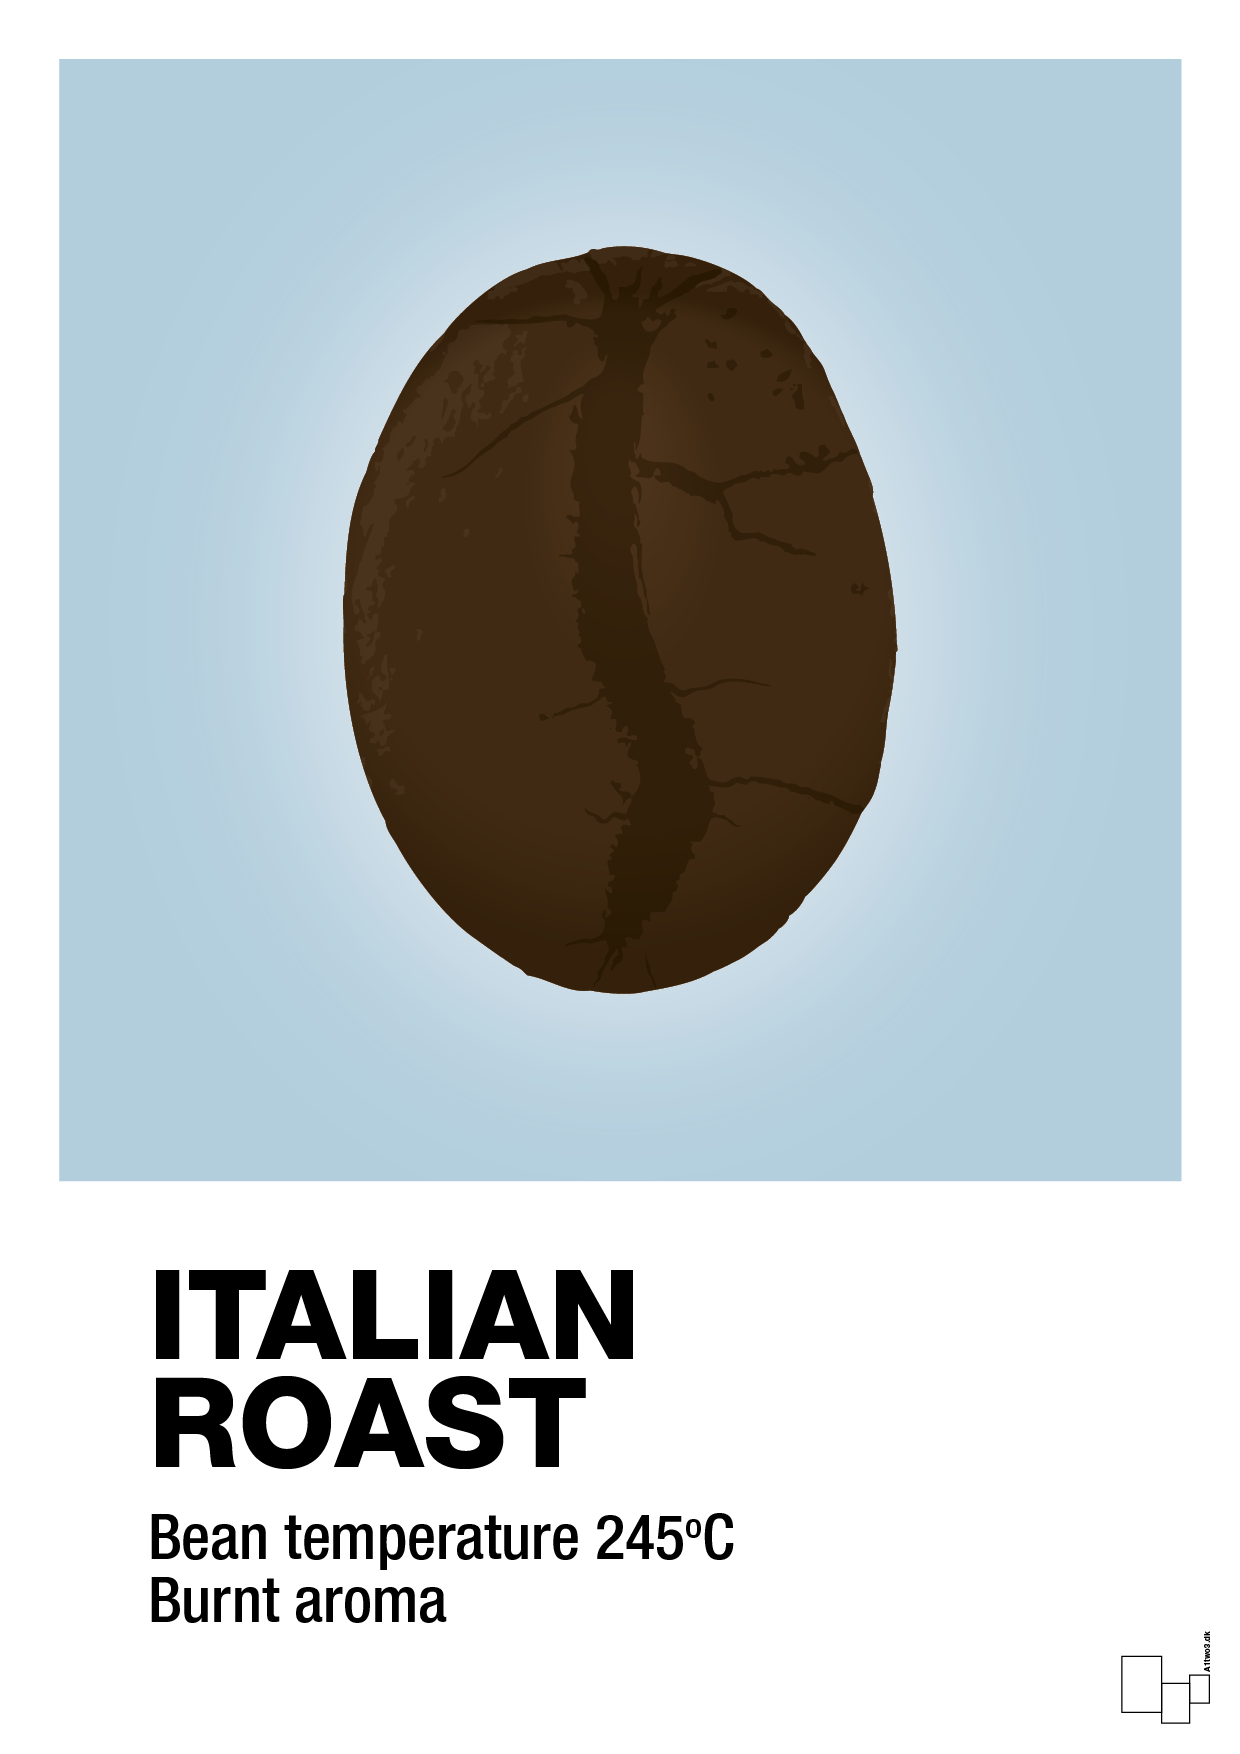 italian roast - Plakat med Mad & Drikke i Heavenly Blue